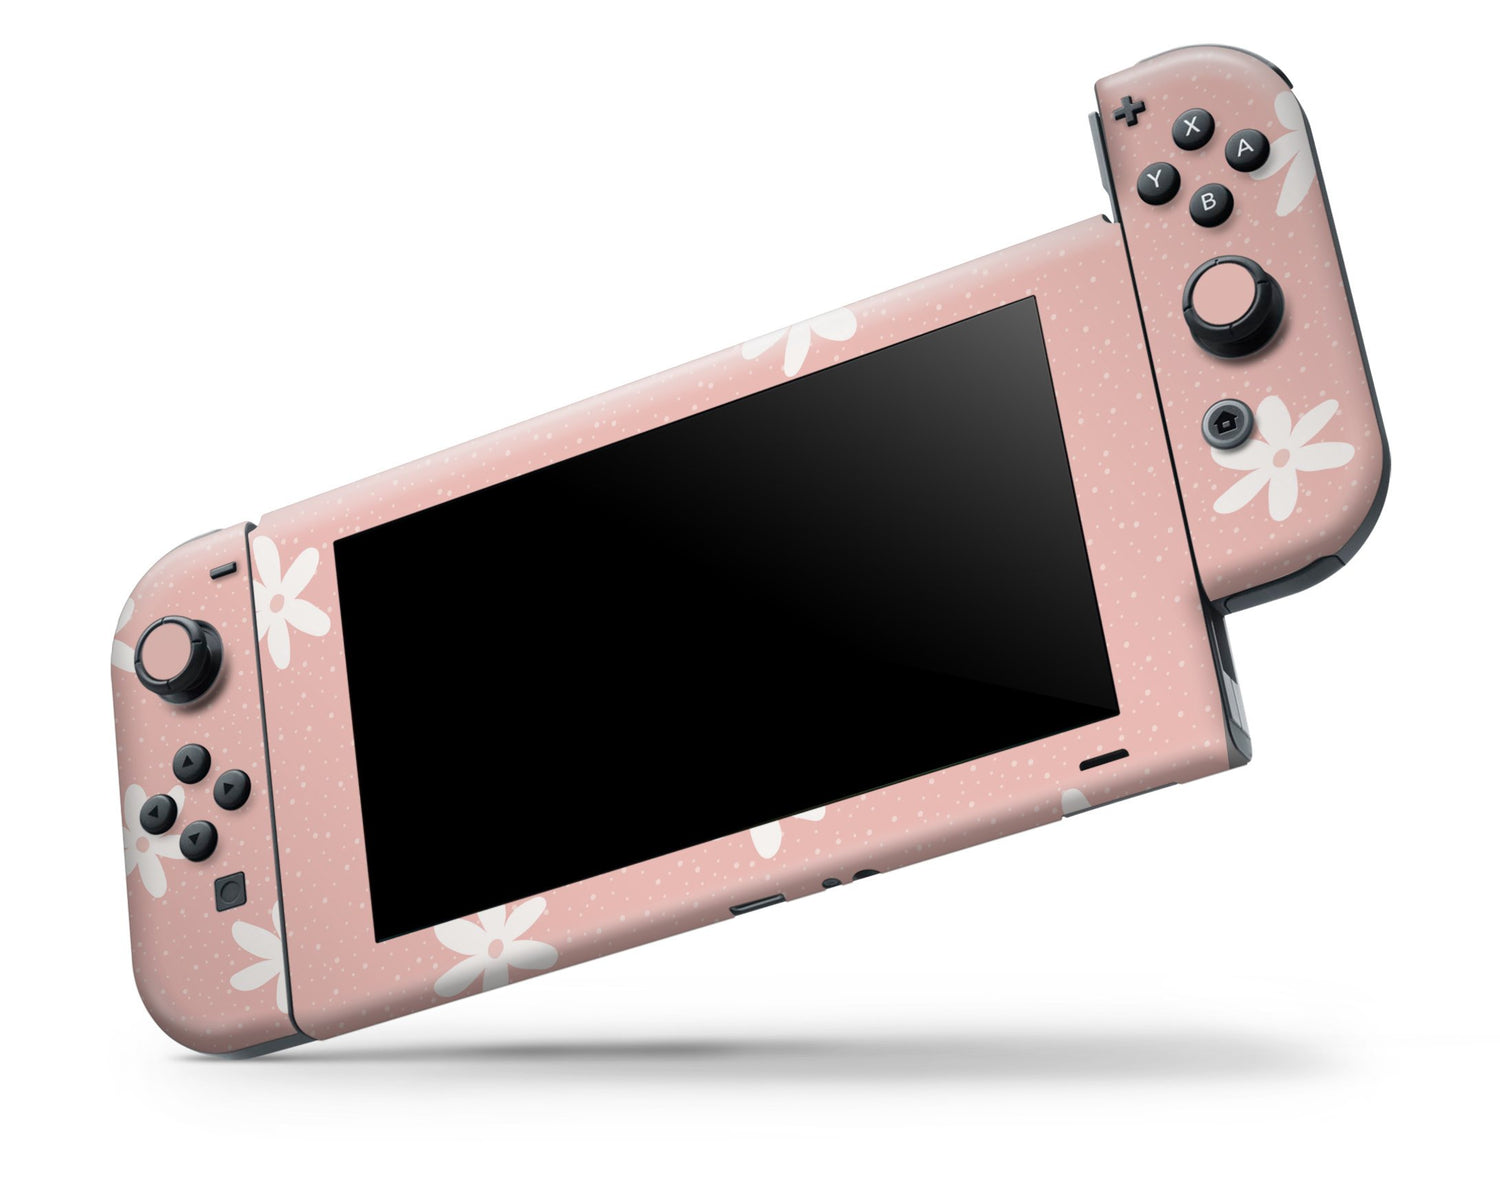 Lux Skins Nintendo Switch Pink Daisy Floral Full Set Skins - Art Floral Skin